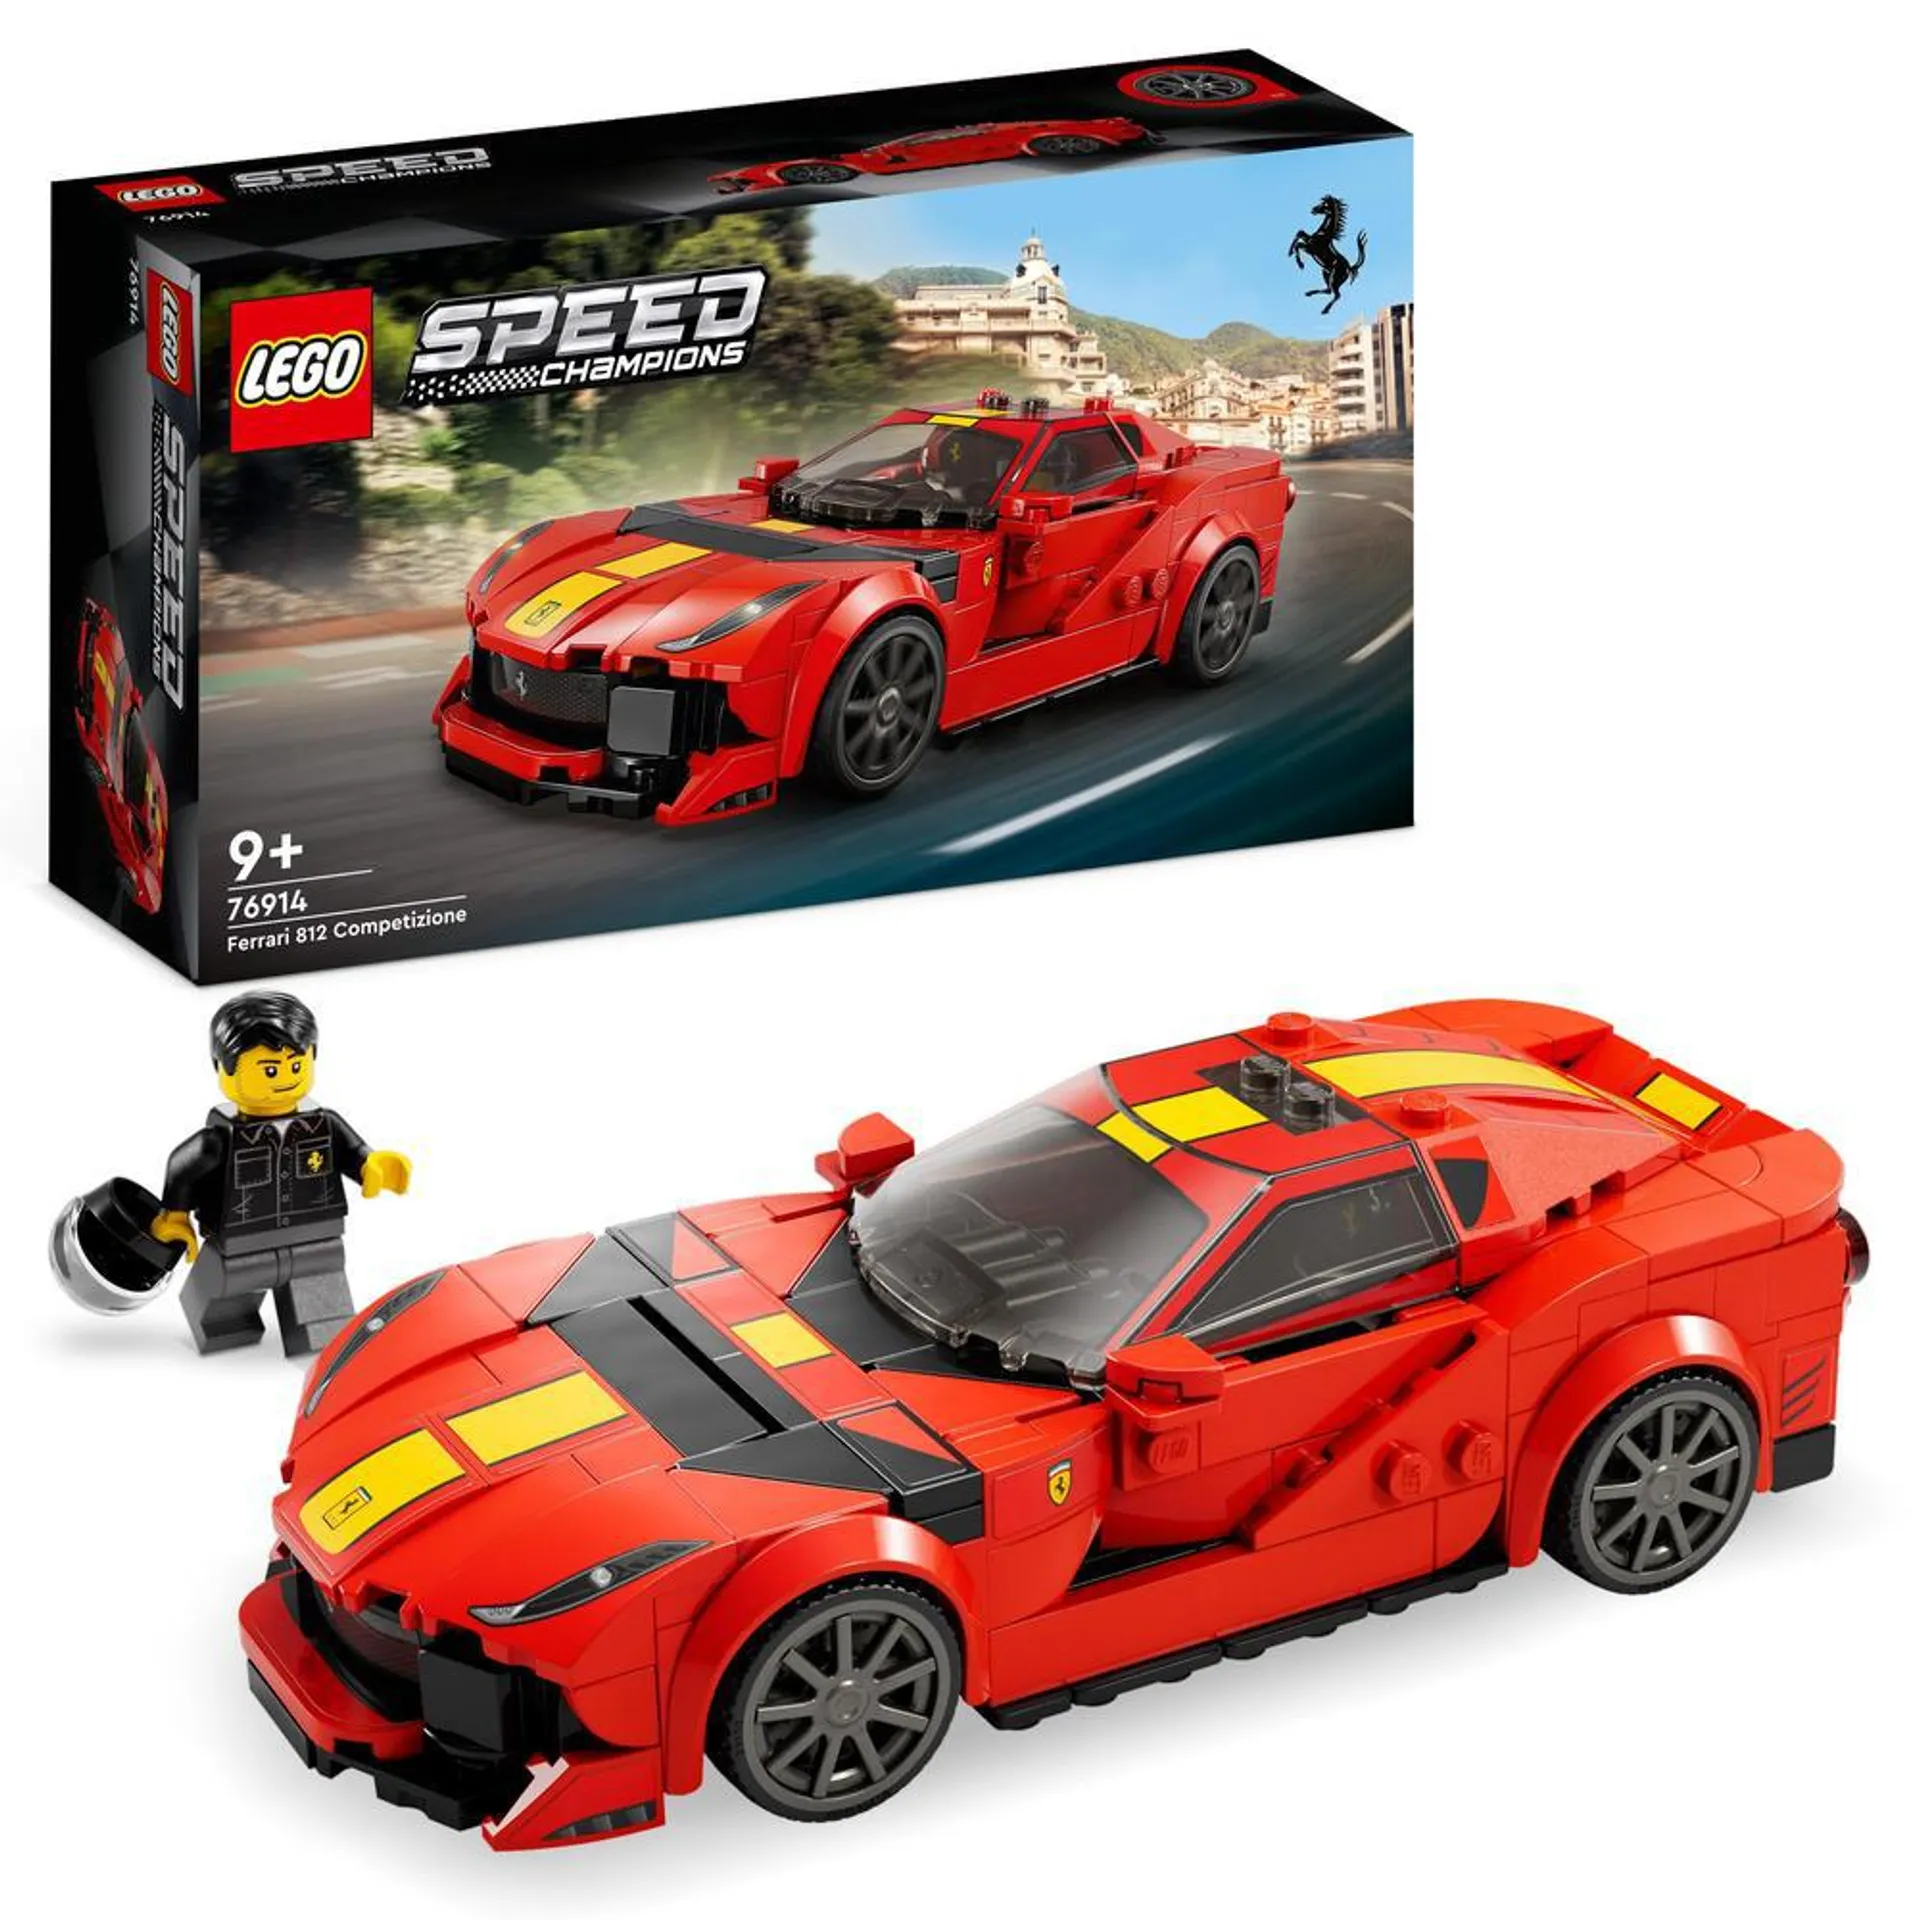 LEGO® 76914 Speed Champions Ferrari 812 Competizione Car Toy